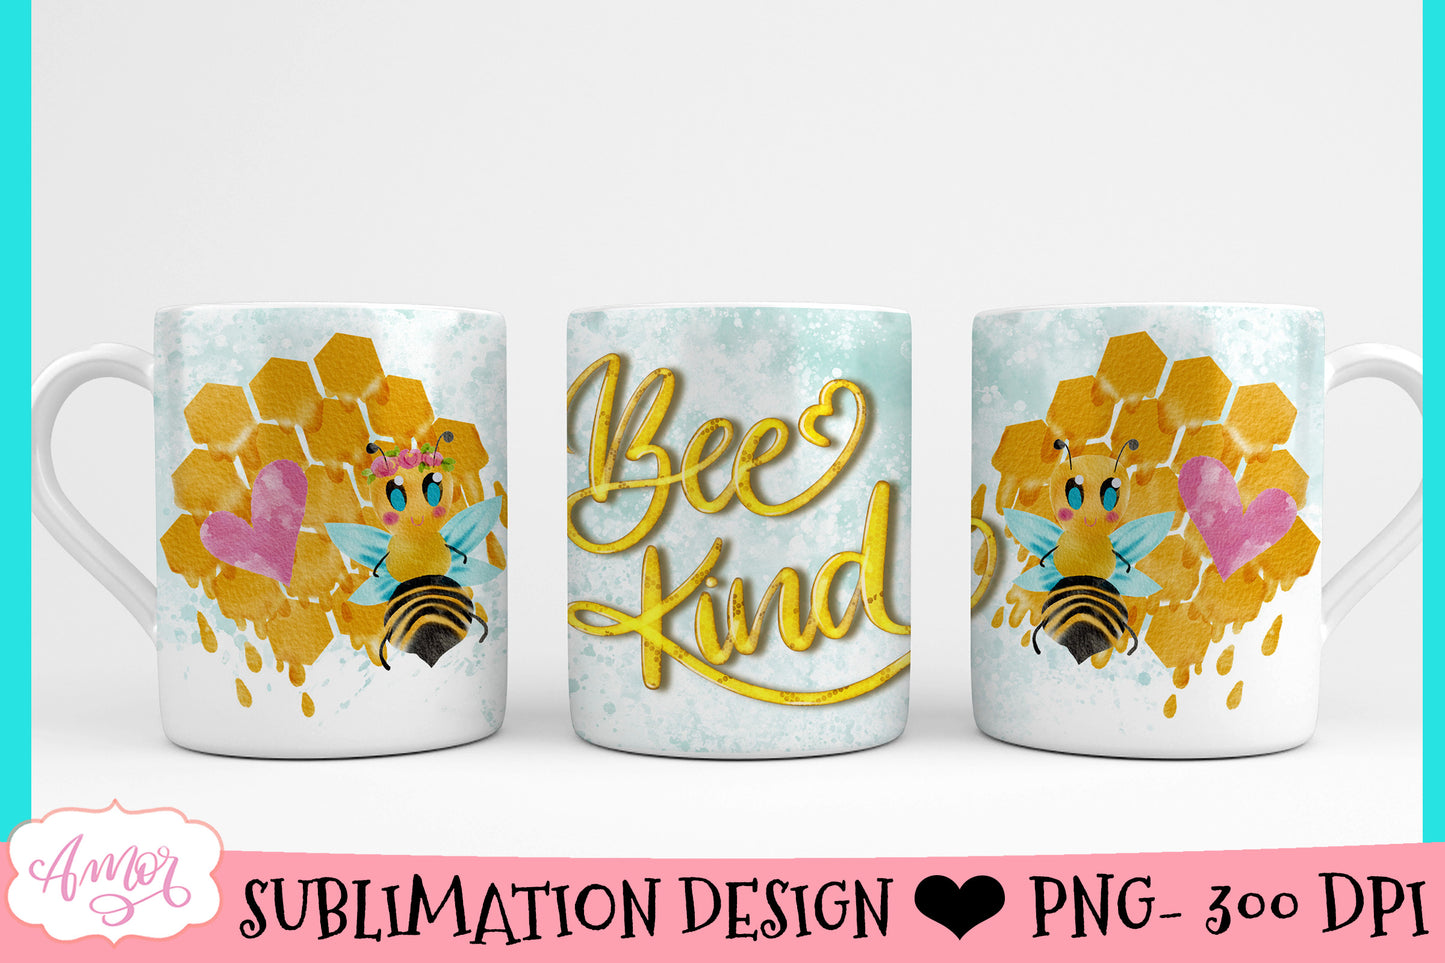 Bee kind mug wrap for sublimation